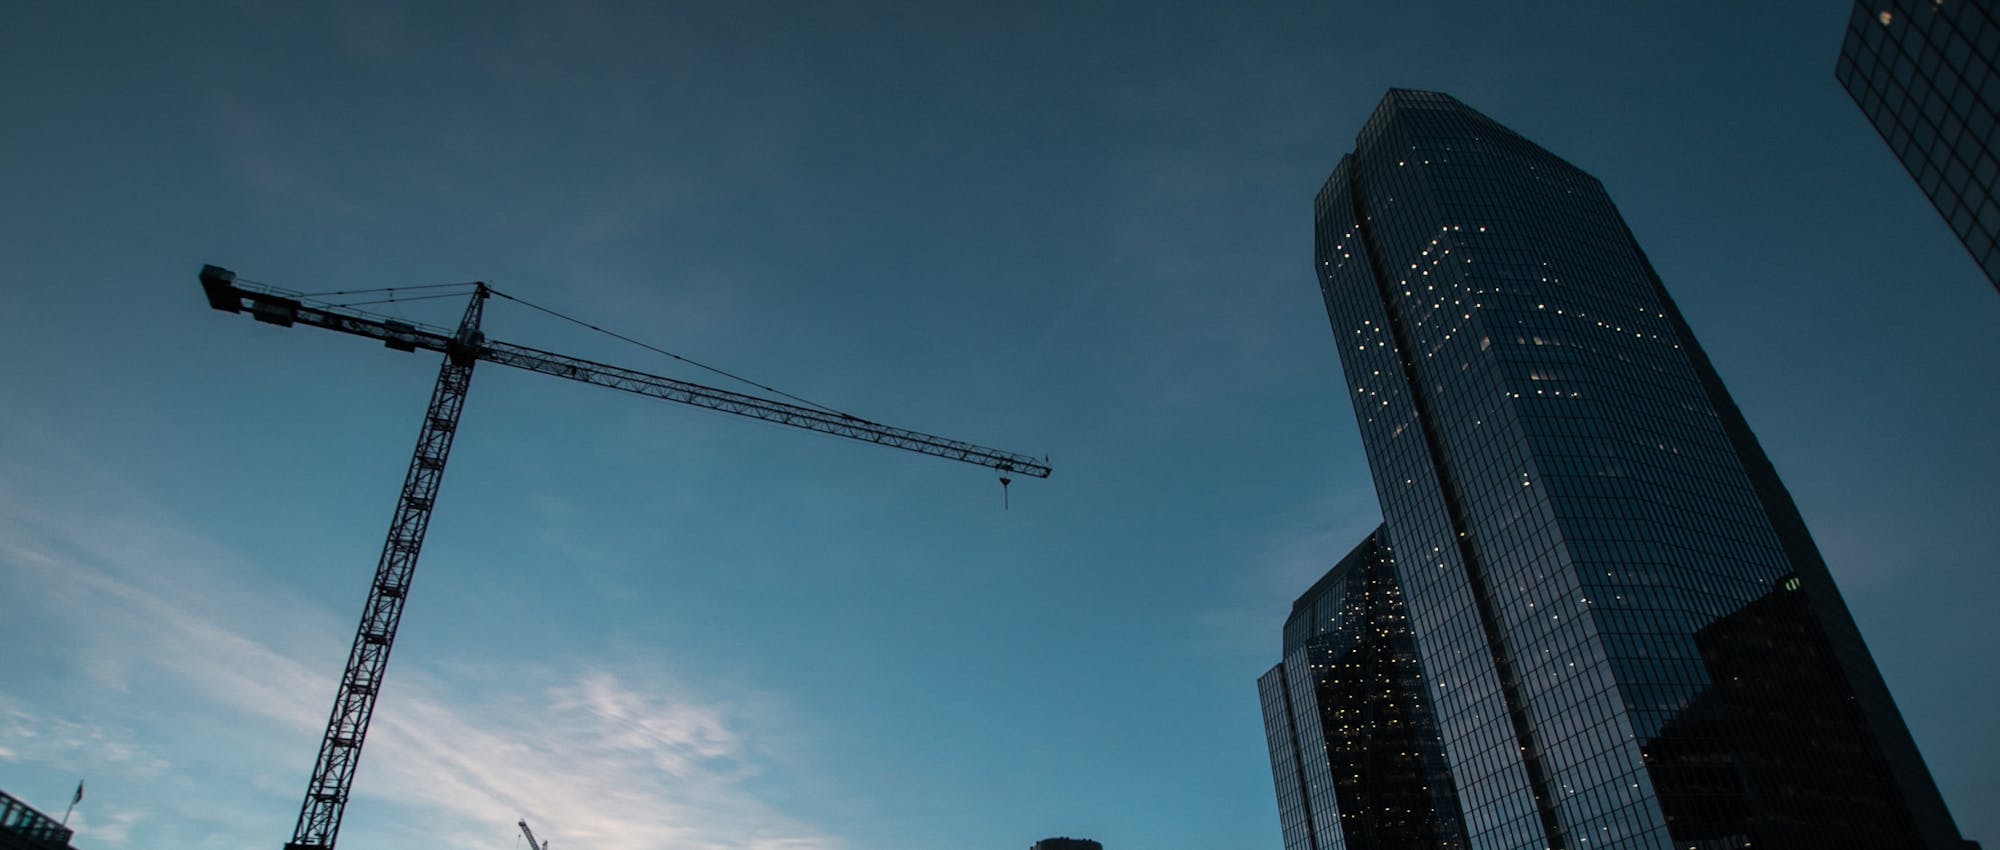 A crane and skyscraper against a blue evening sky